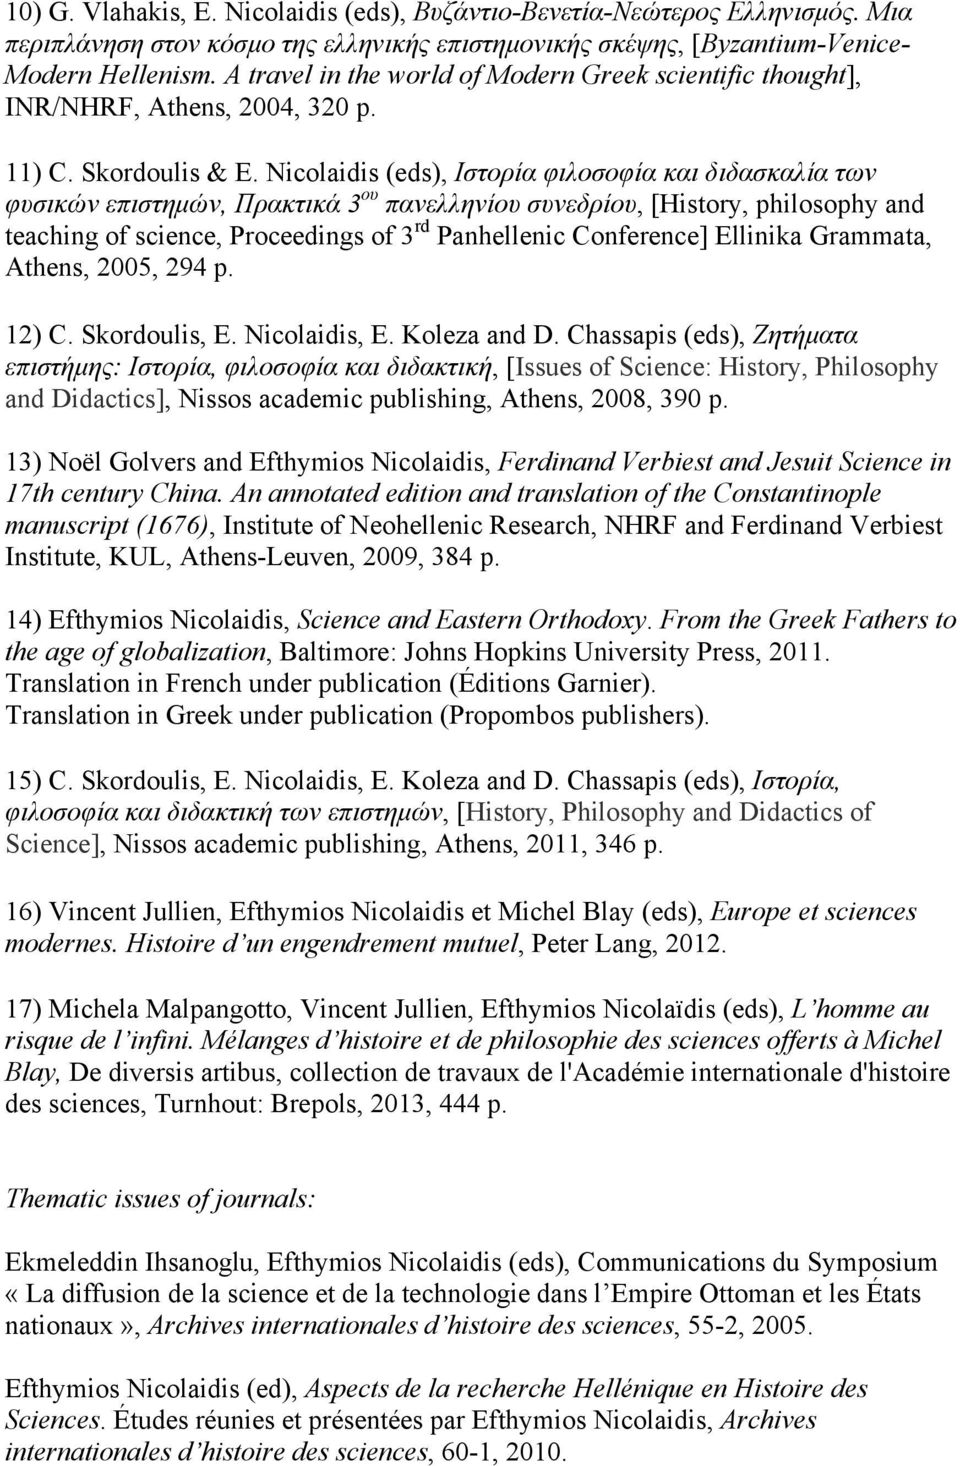 Nicolaidis (eds), Ιστορία φιλοσοφία και διδασκαλία των φυσικών επιστηµών, Πρακτικά 3 ου πανελληνίου συνεδρίου, [History, philosophy and teaching of science, Proceedings of 3 rd Panhellenic